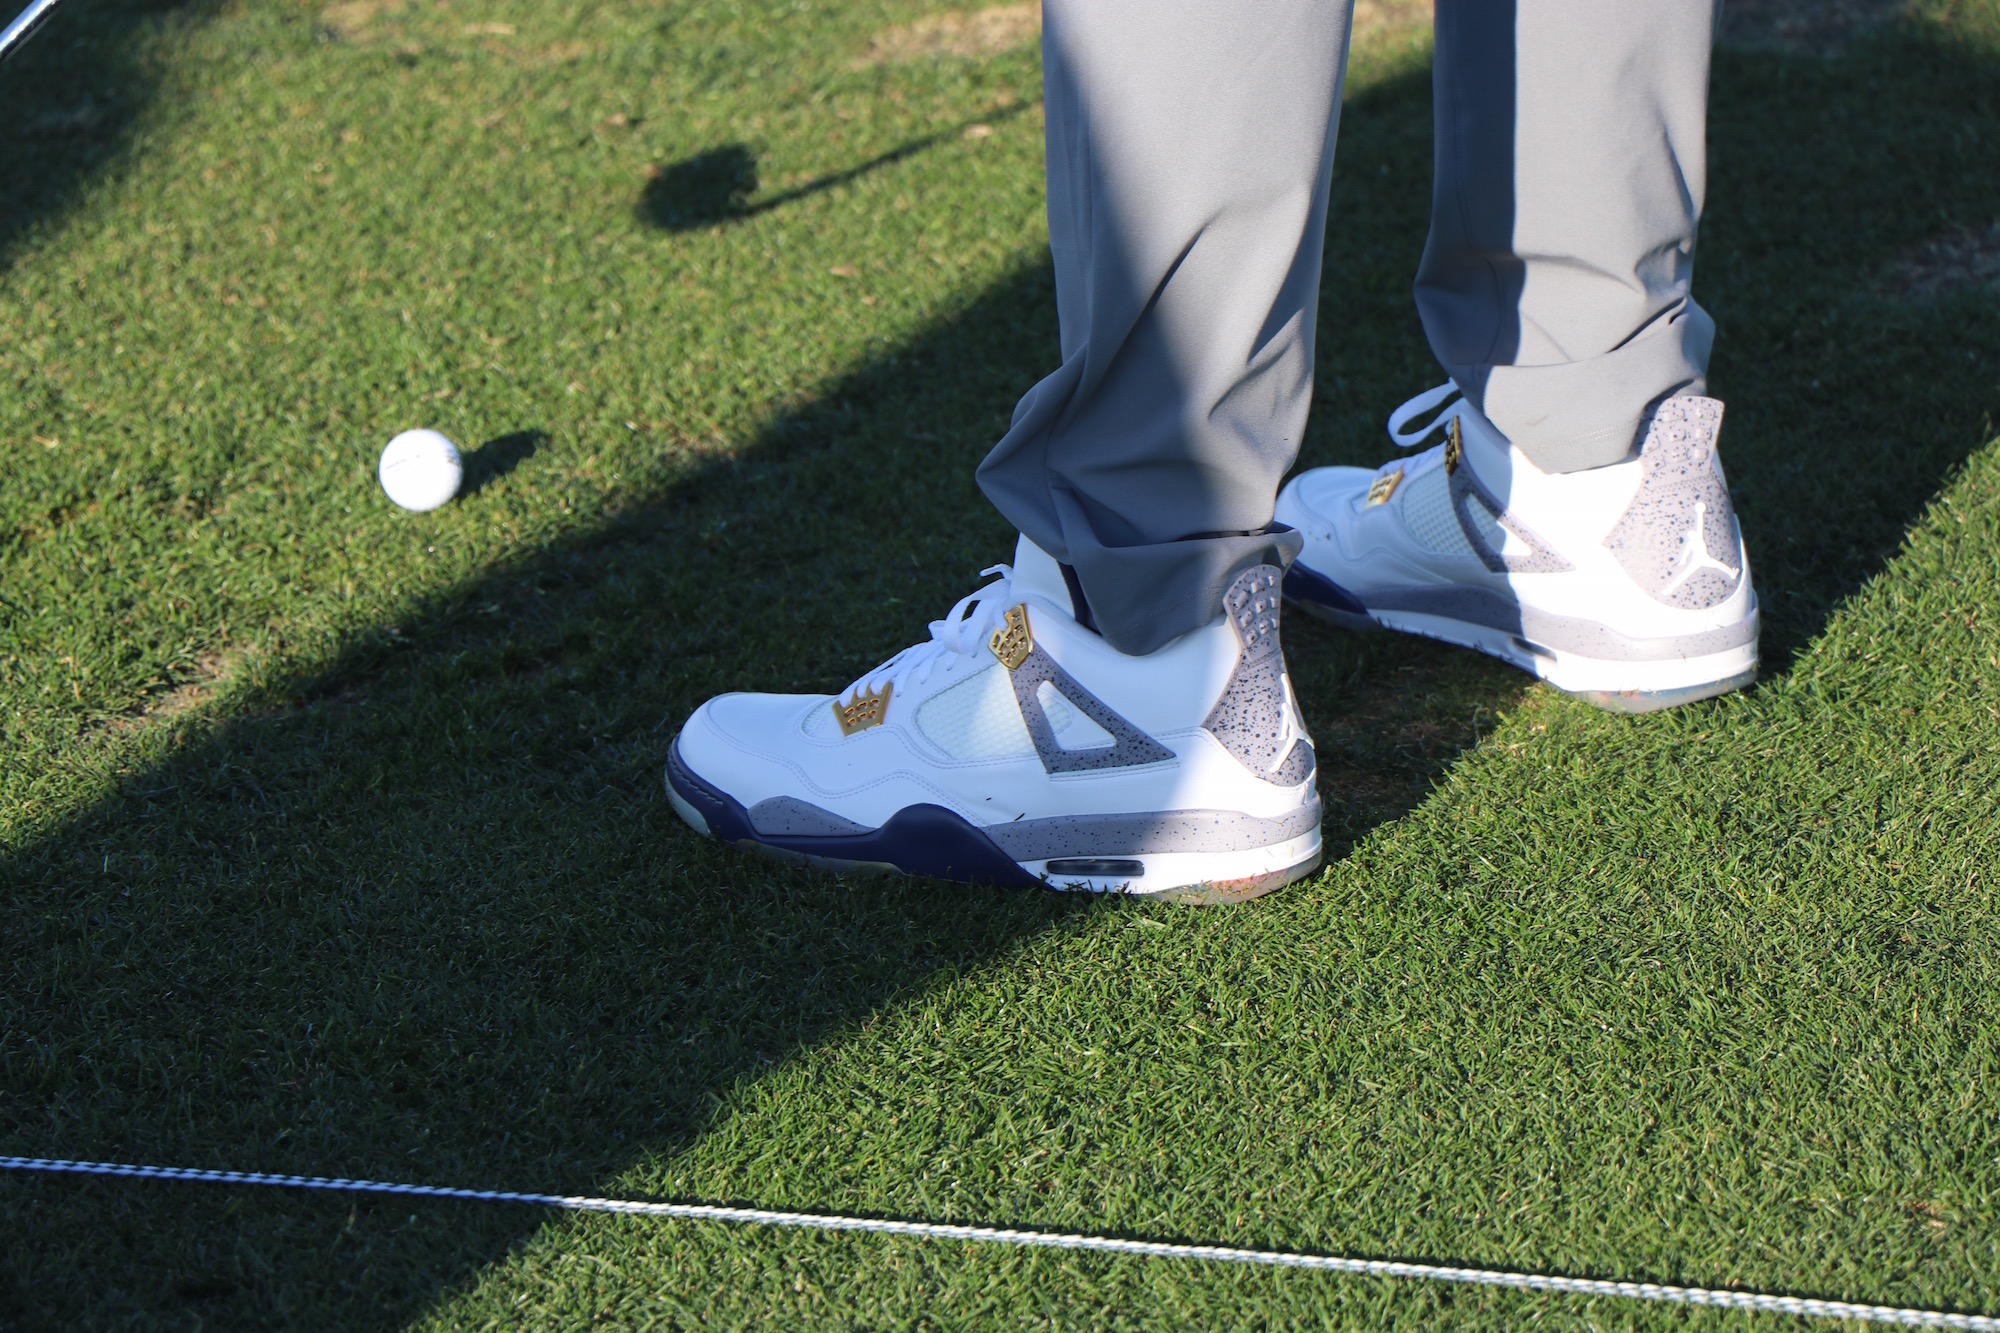 CC Sabathia shows off his limited Jordan 4 Eastside Golf shoes